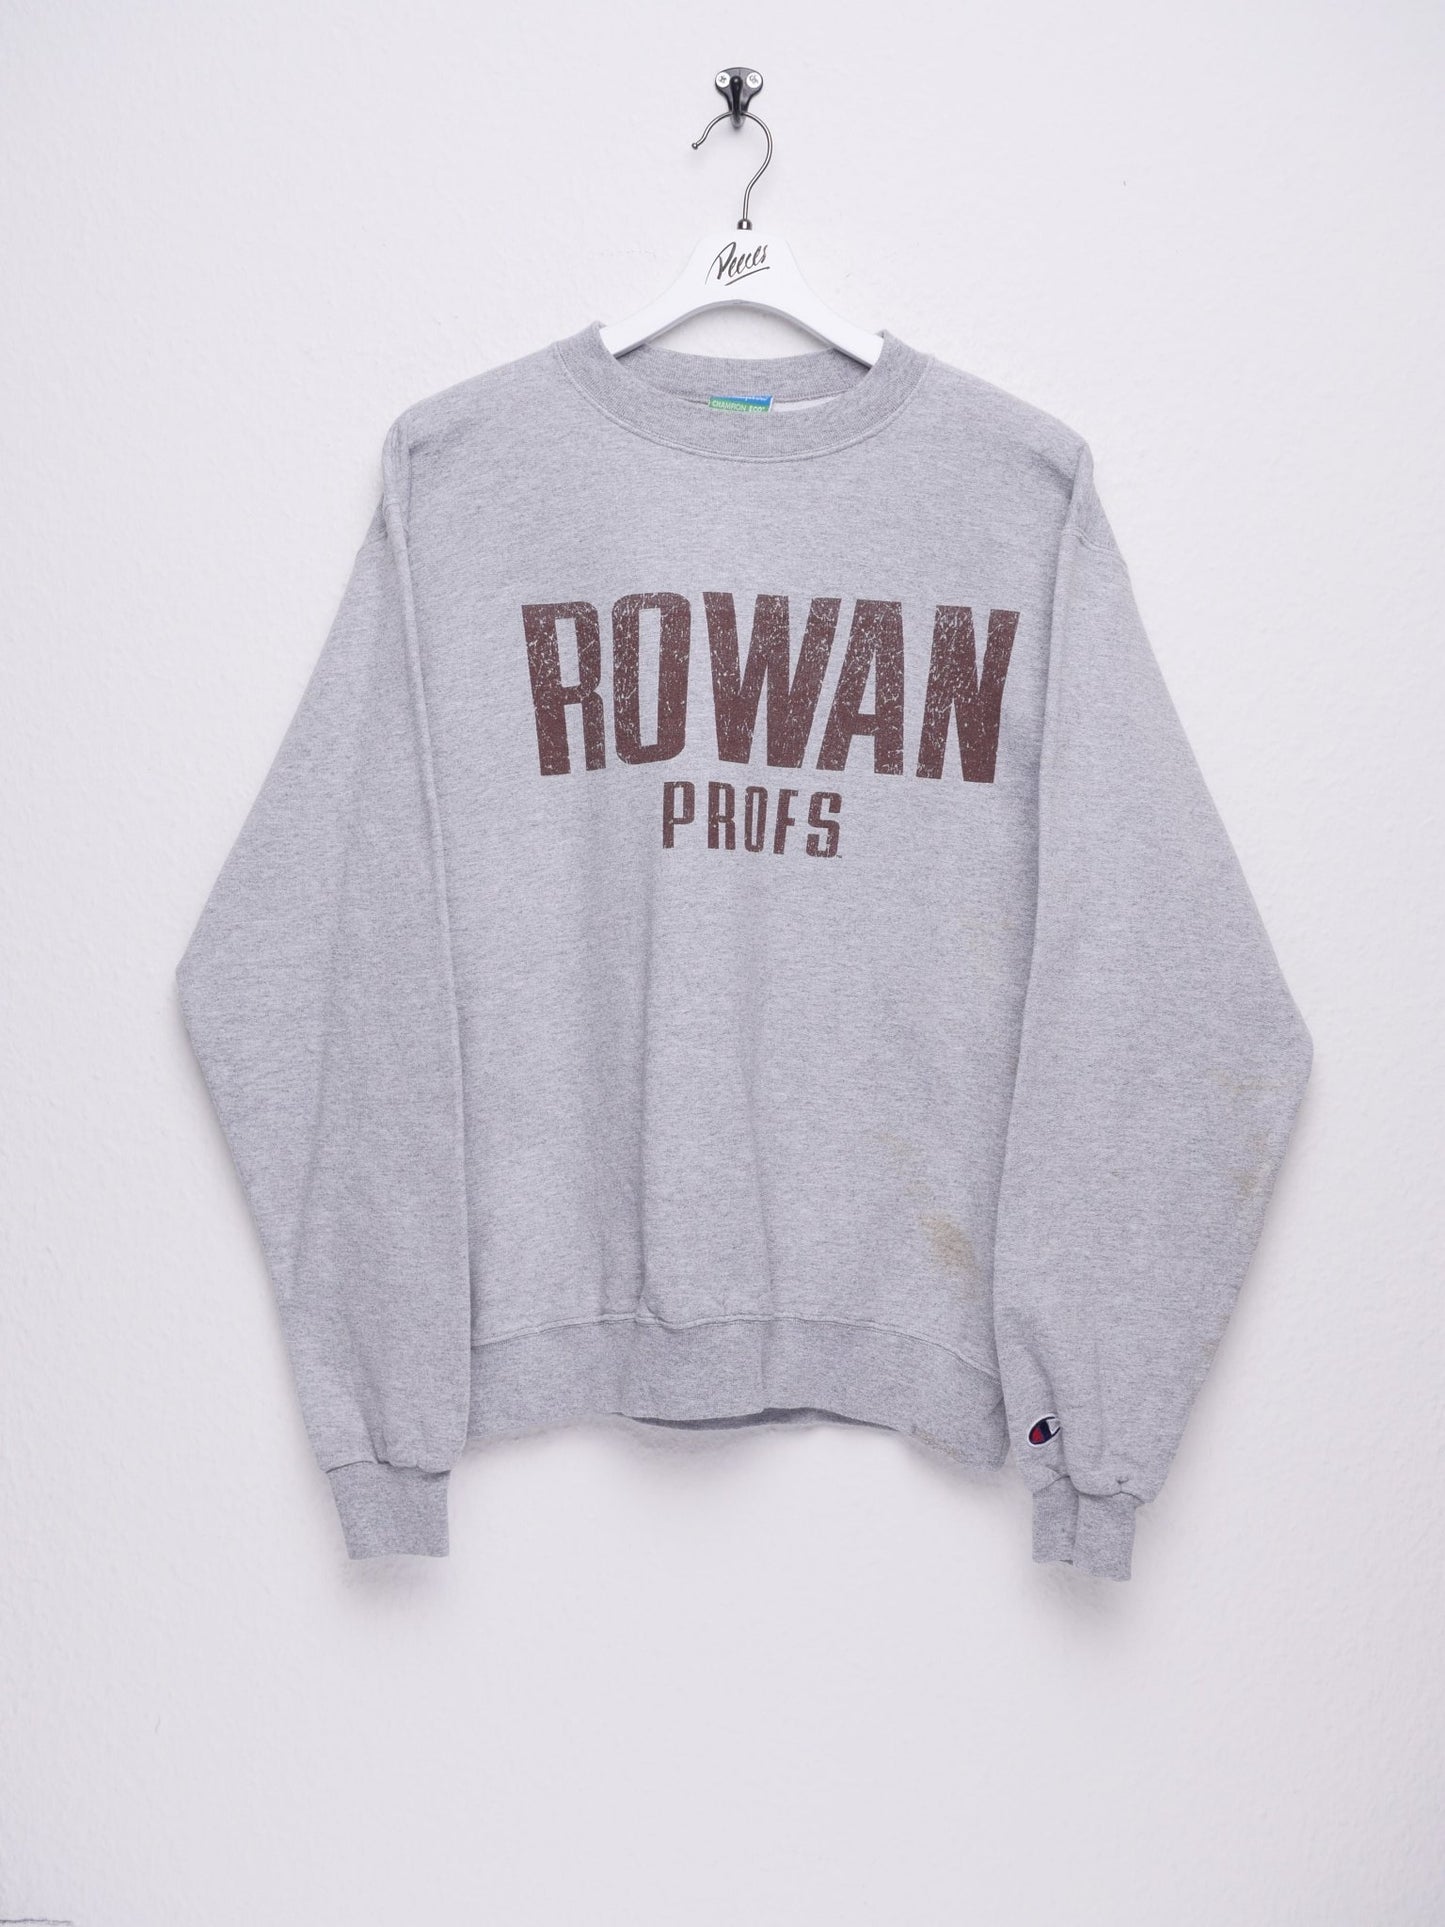 Champion Rowan Profs embroidered Logo Sweater - Peeces